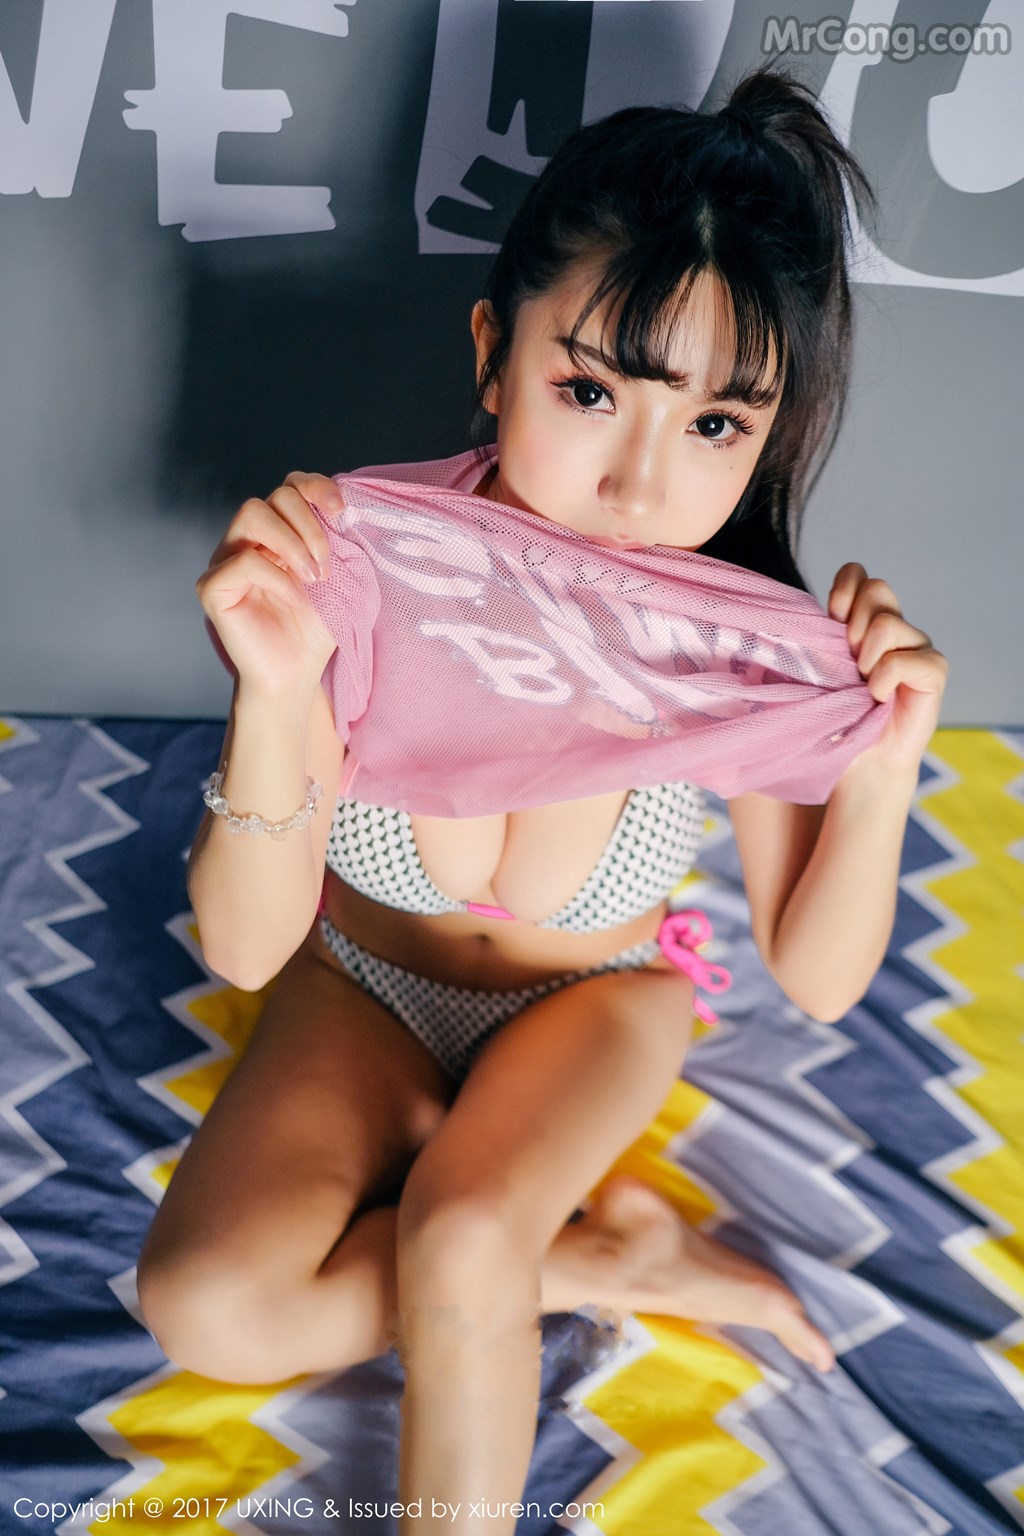 UXING Vol.053: Sunny Model (晓 茜) (39 photos)